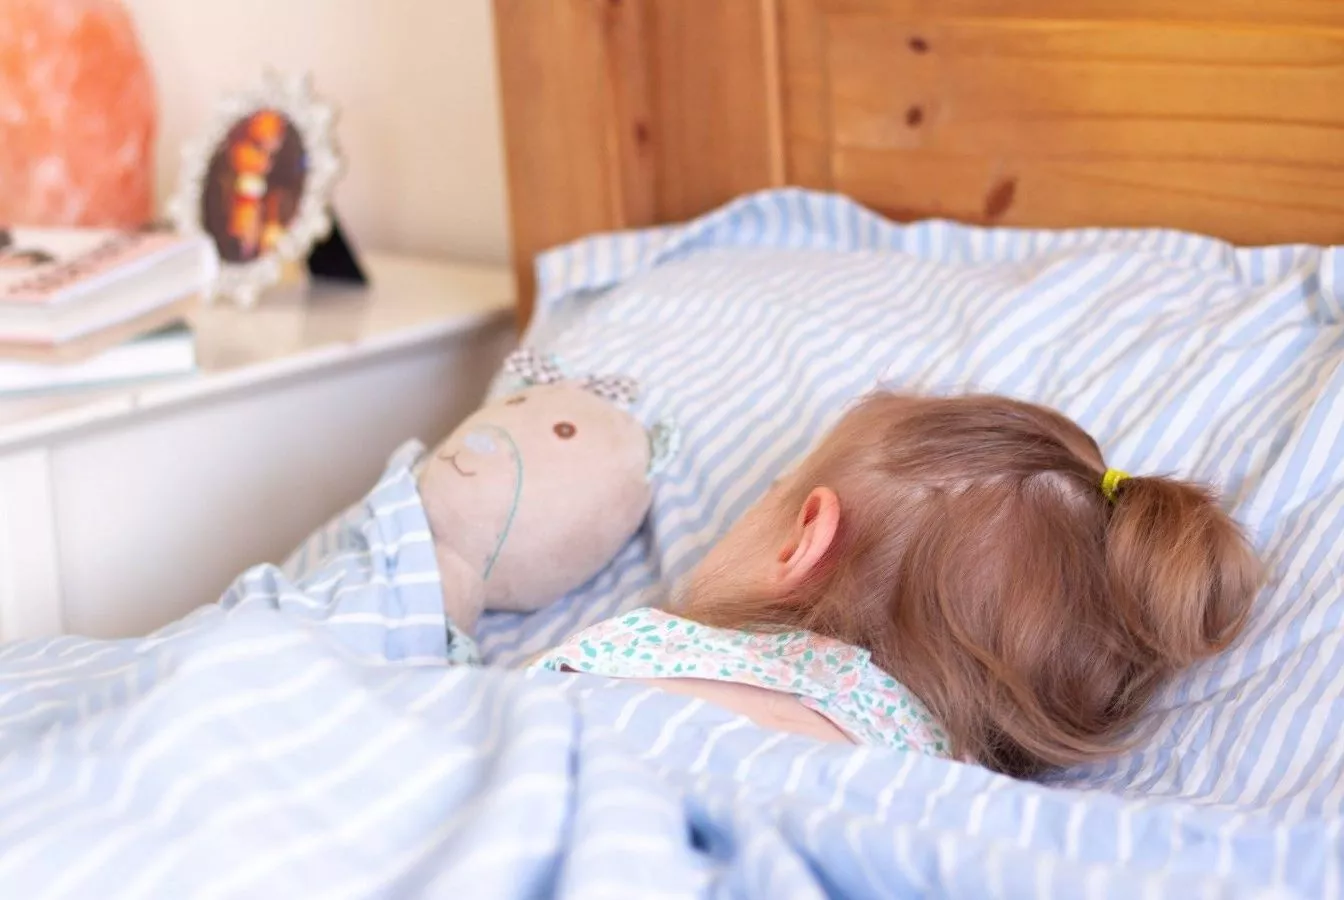 DOES WHITE NOISE REALLY HELP KIDS SLEEP?